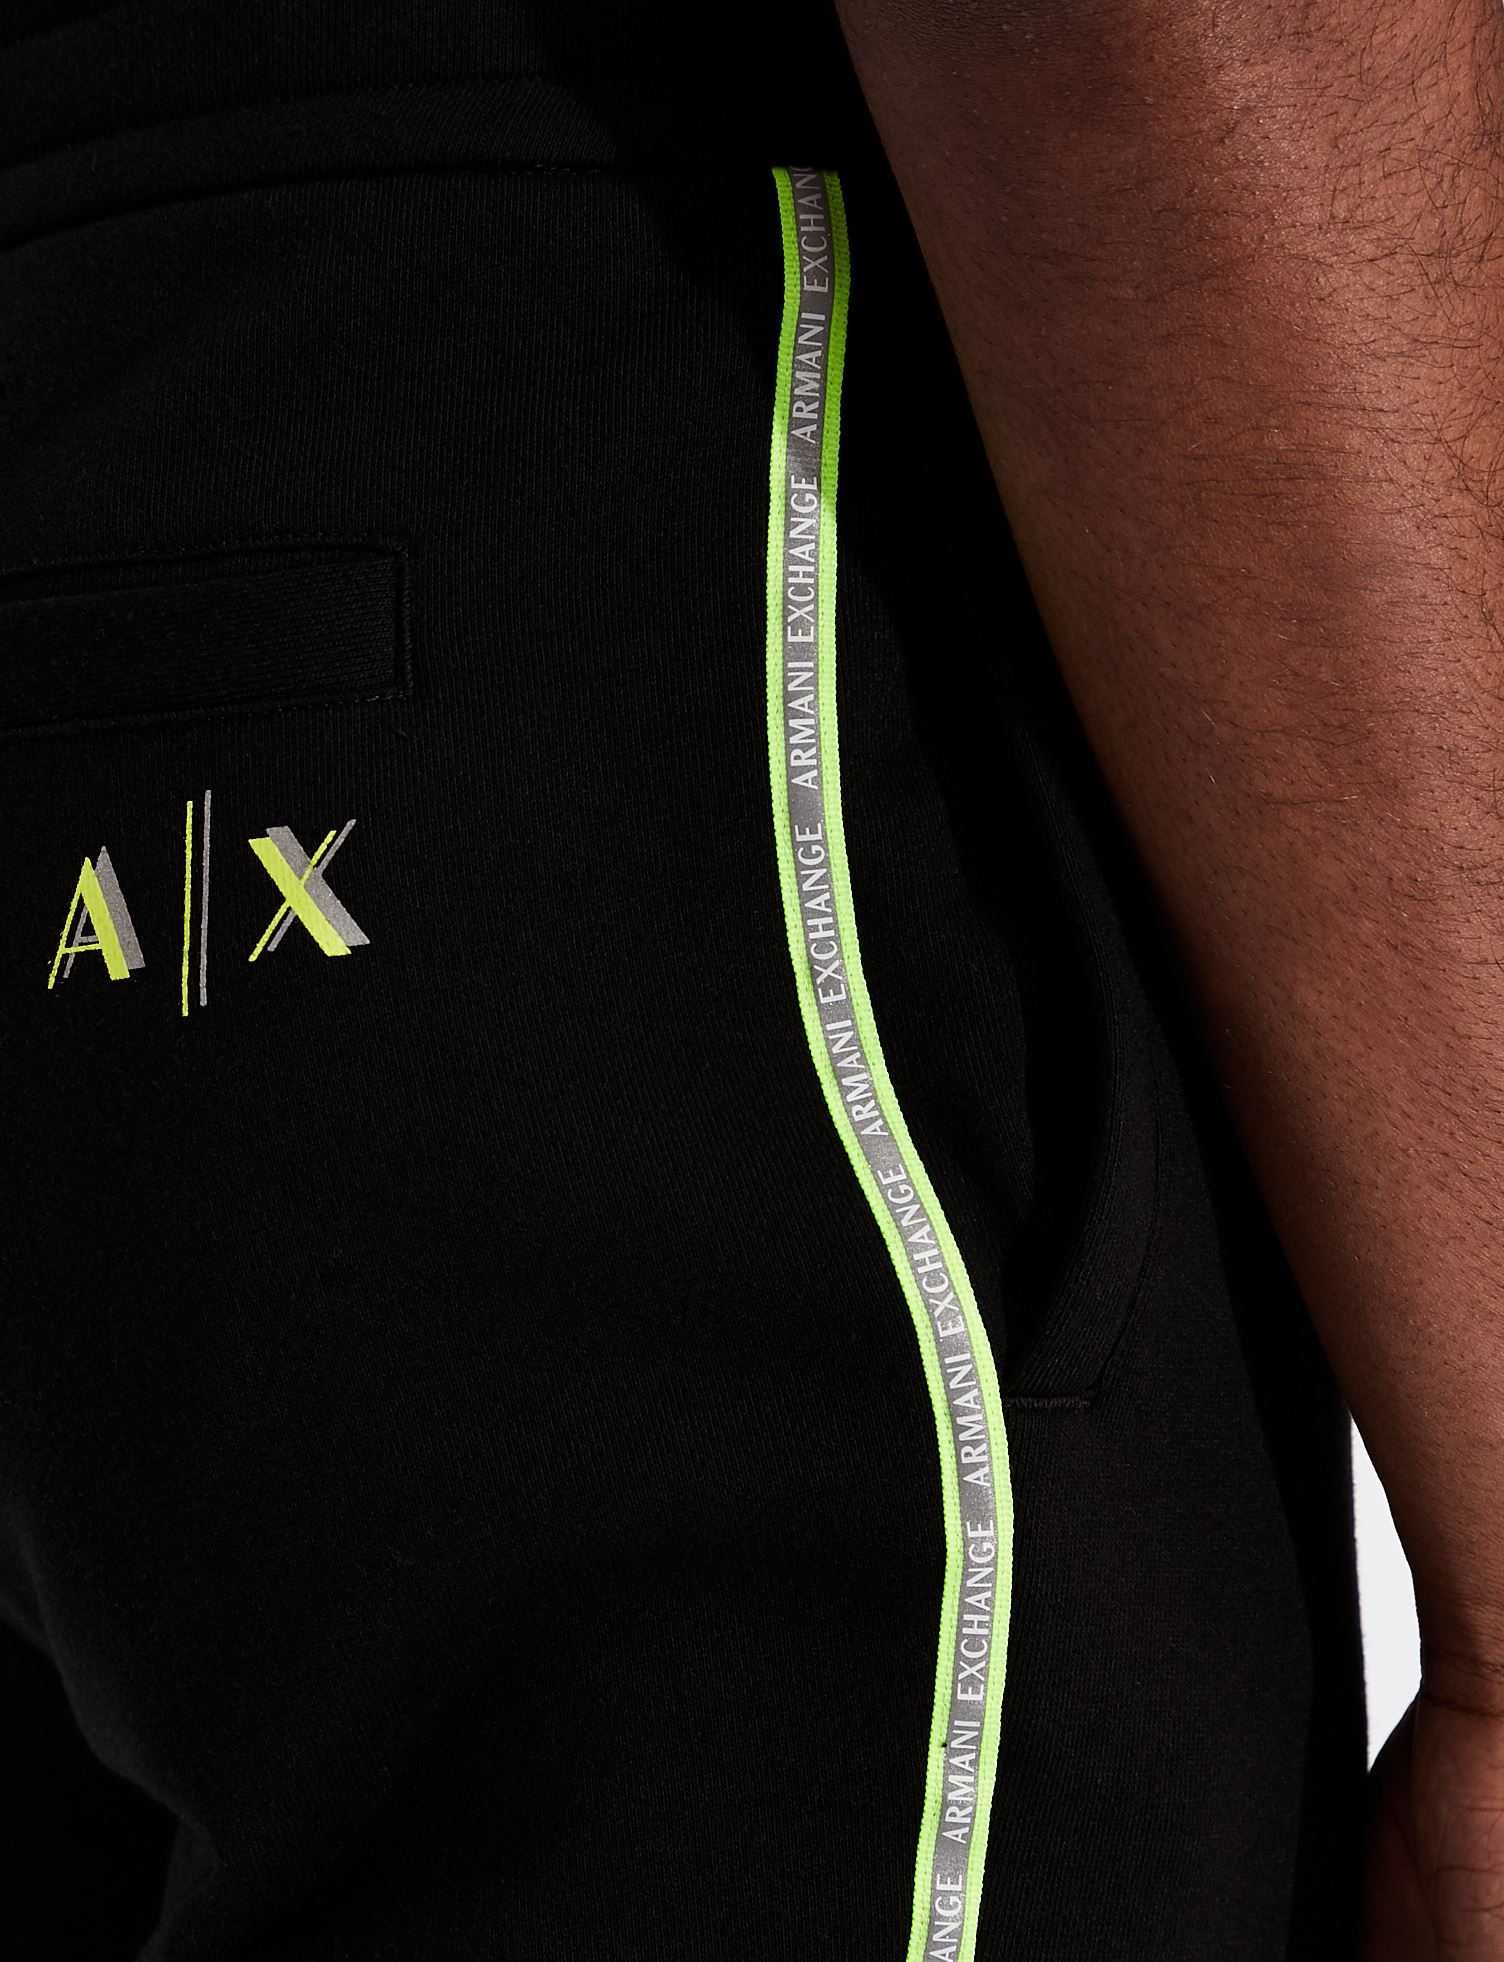 Pantaloni trening Armani Sweatpants masura XL si XXL (2modele)